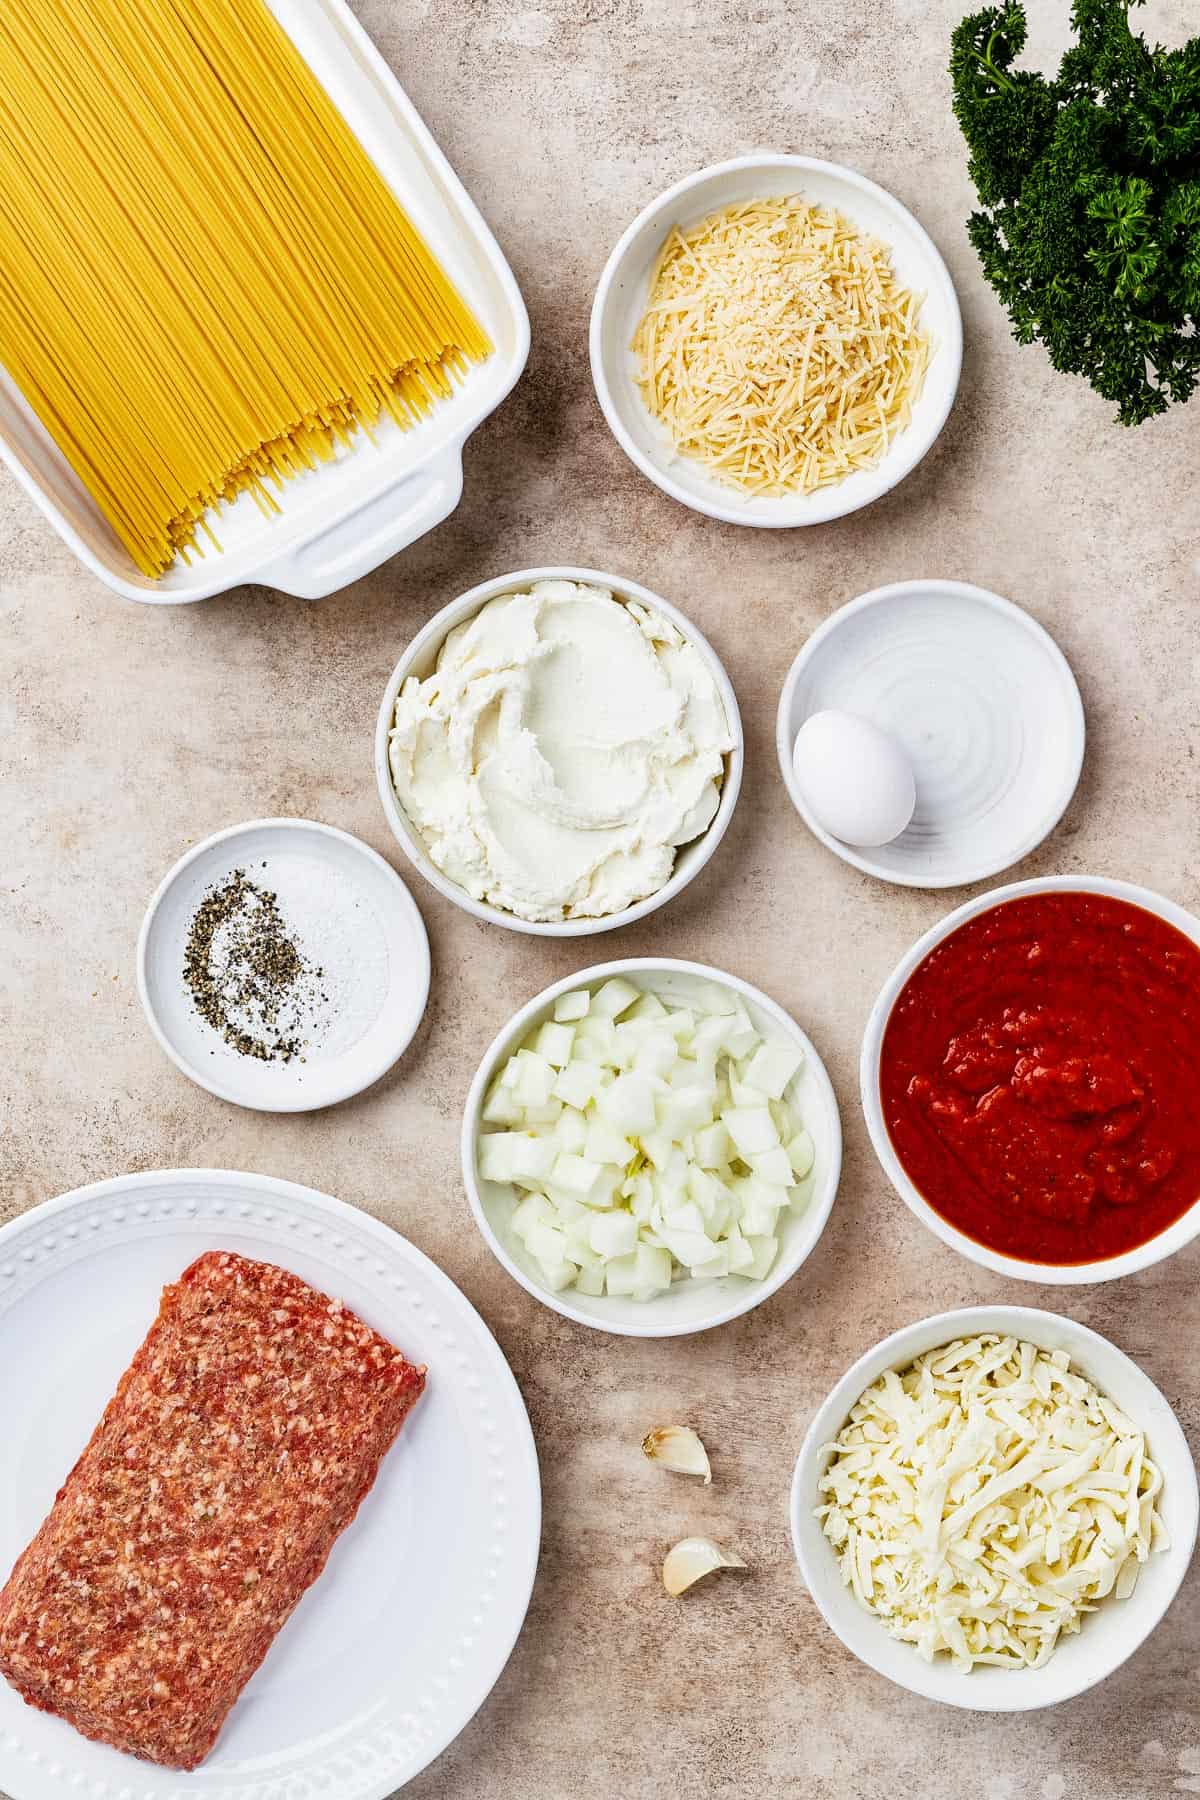 From top left: dry spaghetti, onion, seasonings, ricotta, an egg, mozzarella, marinara sauce, italian sausage, garlic, parmesan.